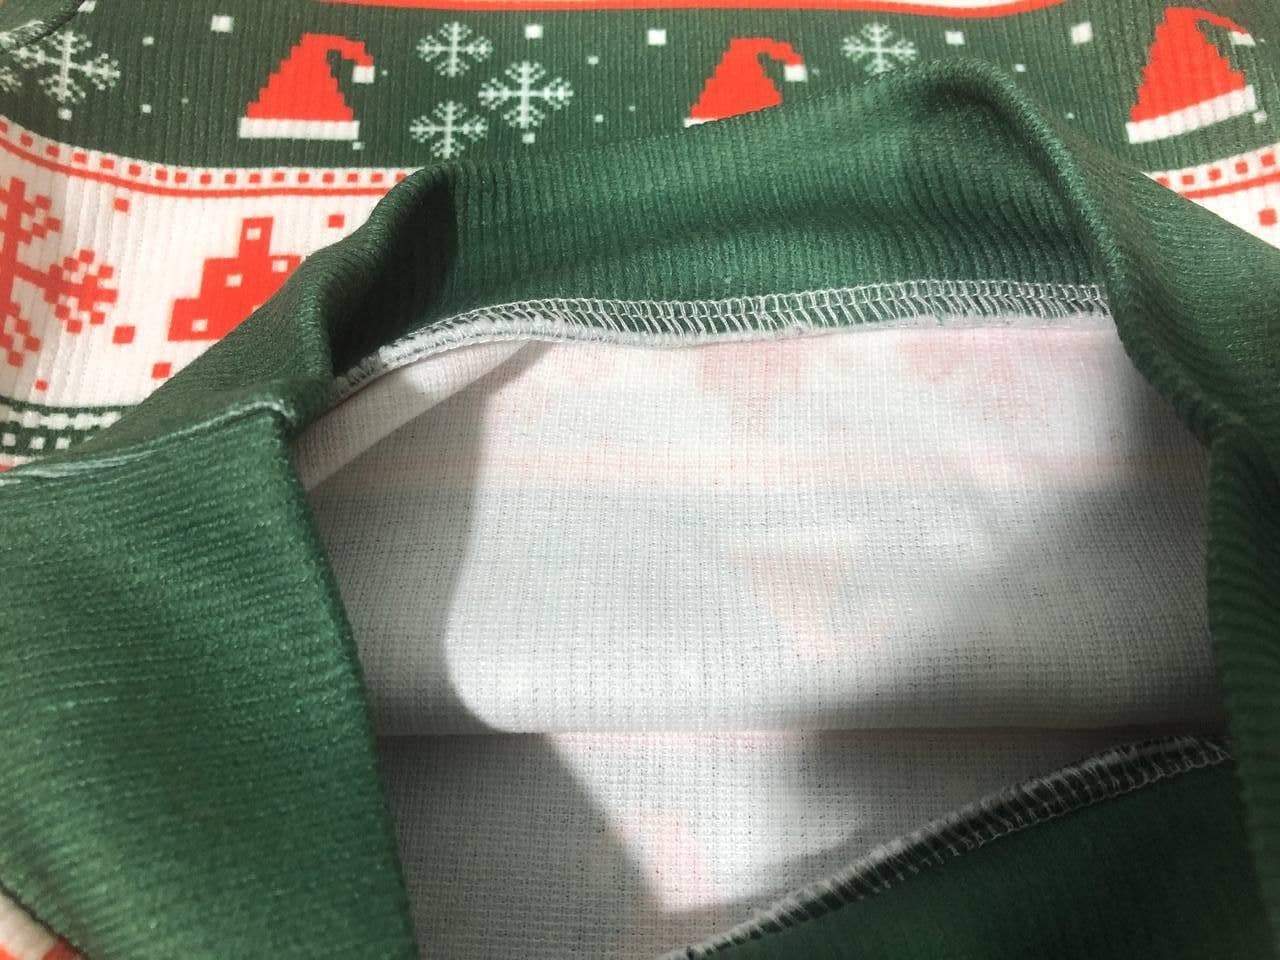 C.C. x Lelouch Anime Ugly Christmas Sweater Custom Code Geass Xmas Gift